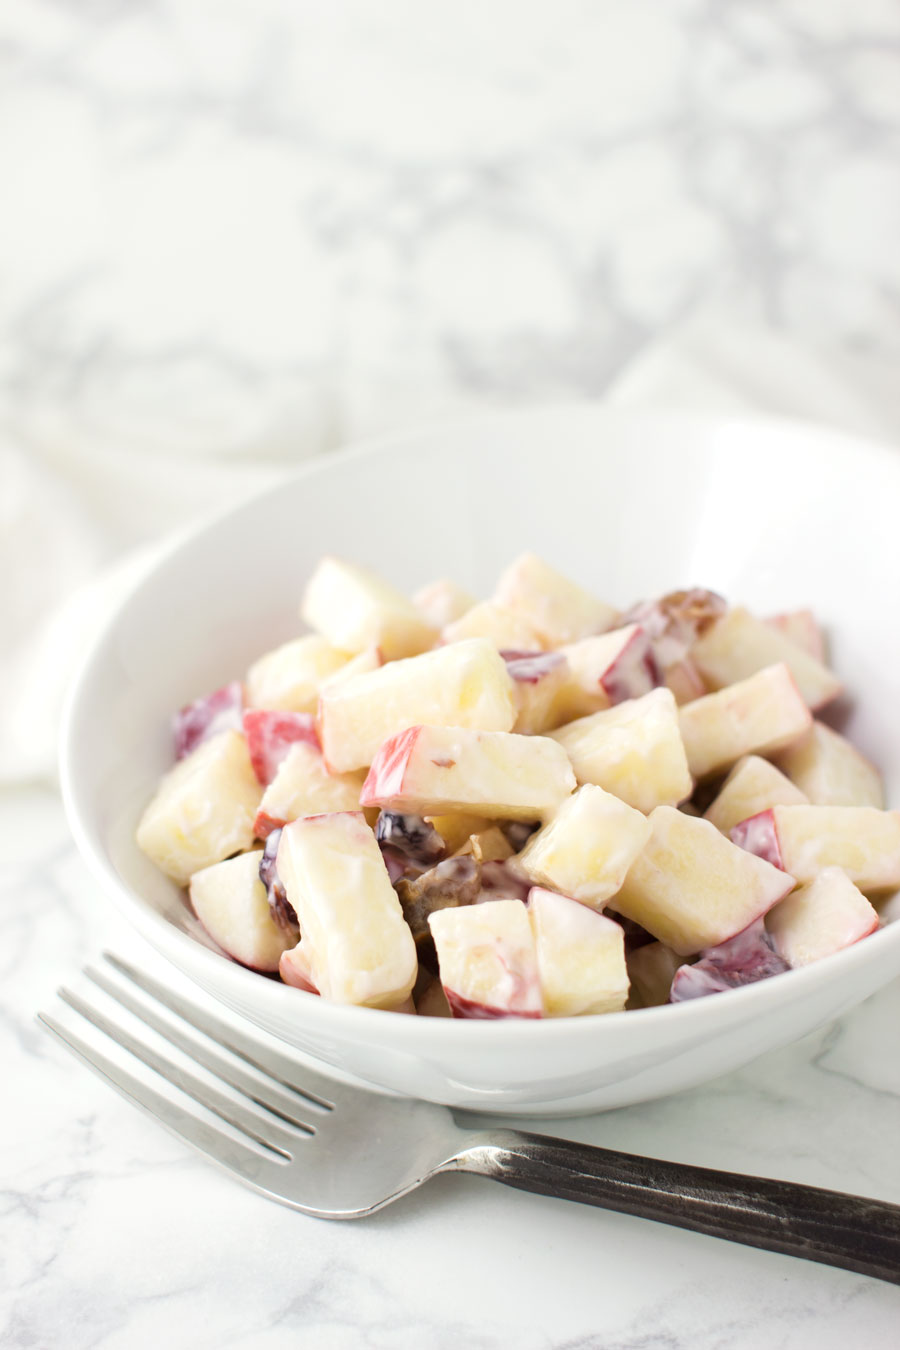 Cran-Apple Fruit Salad recipe from acleanplate.com #paleo #aip #autoimmuneprotocol